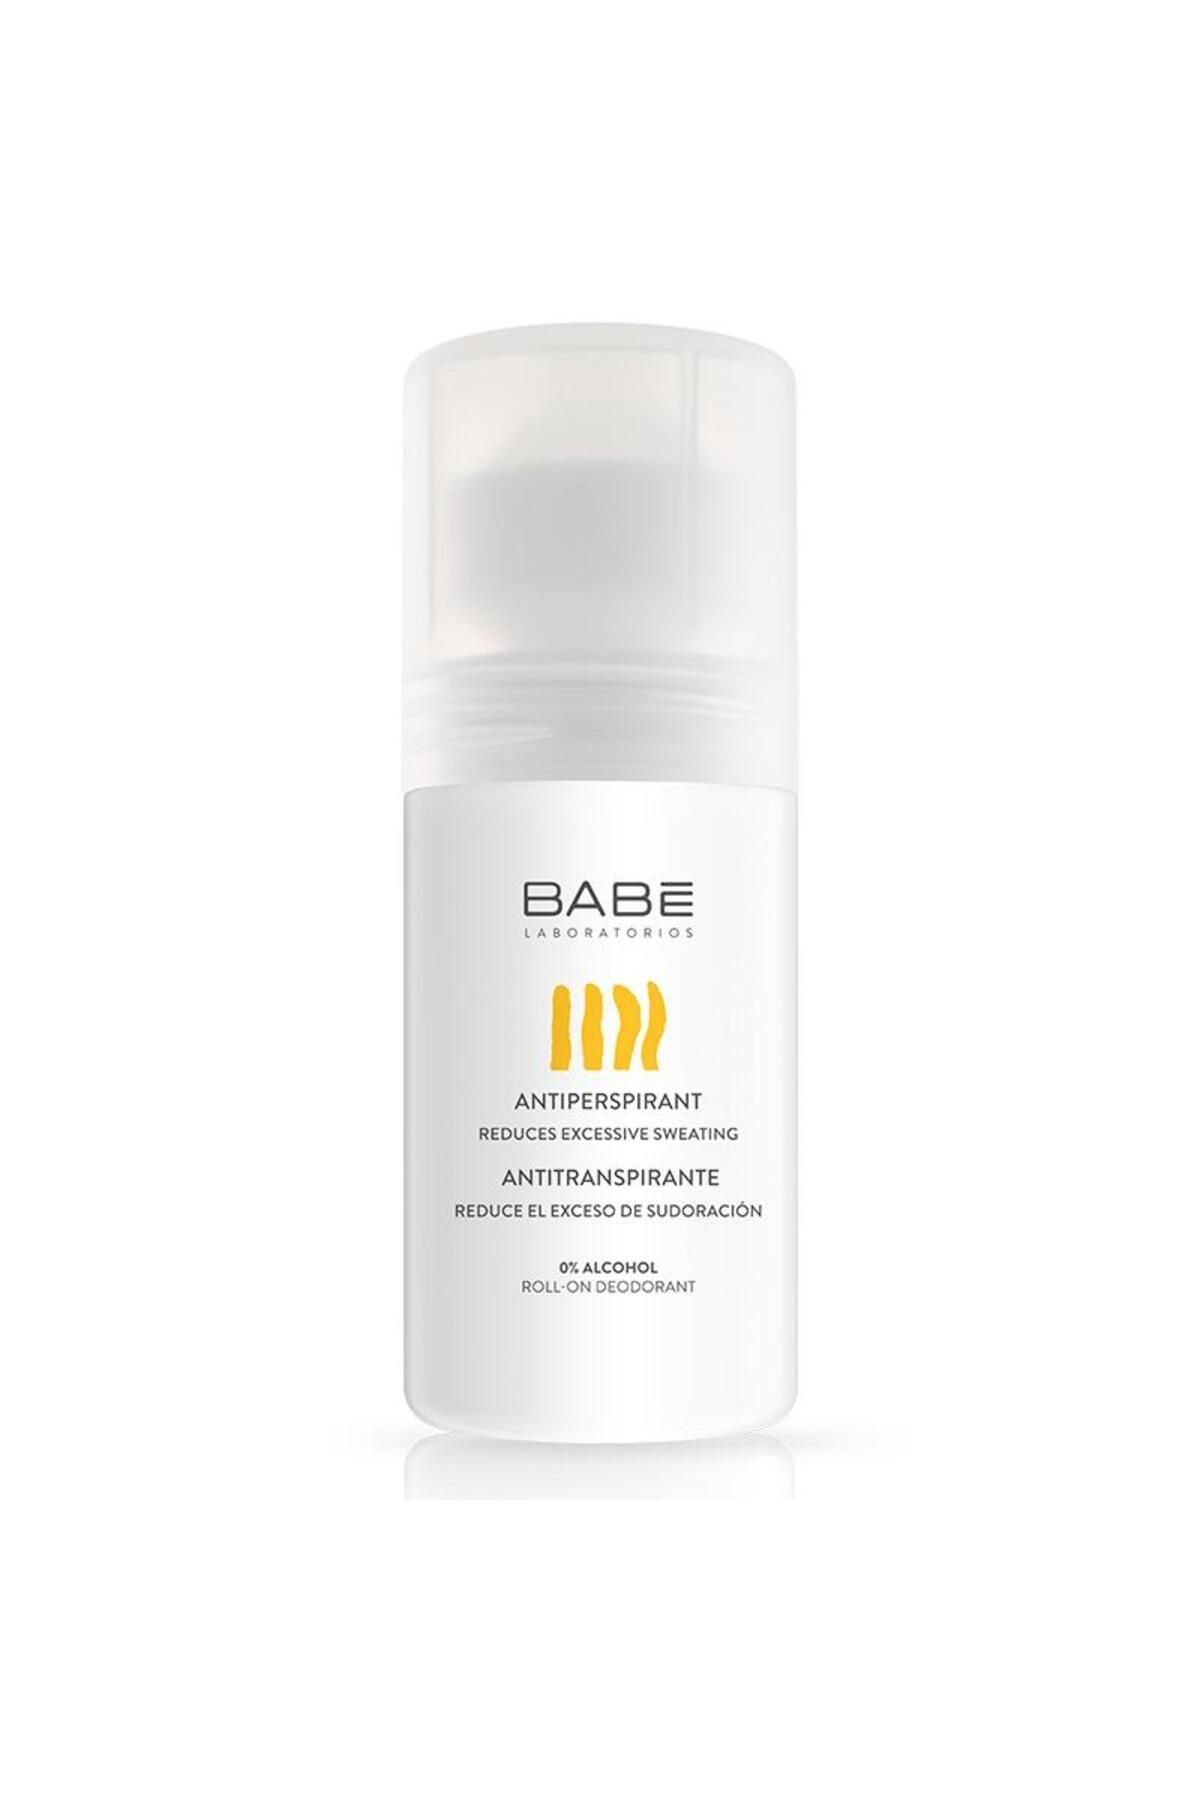 Babe Laboratorios Babe Roll-on Deodorant 50 ml